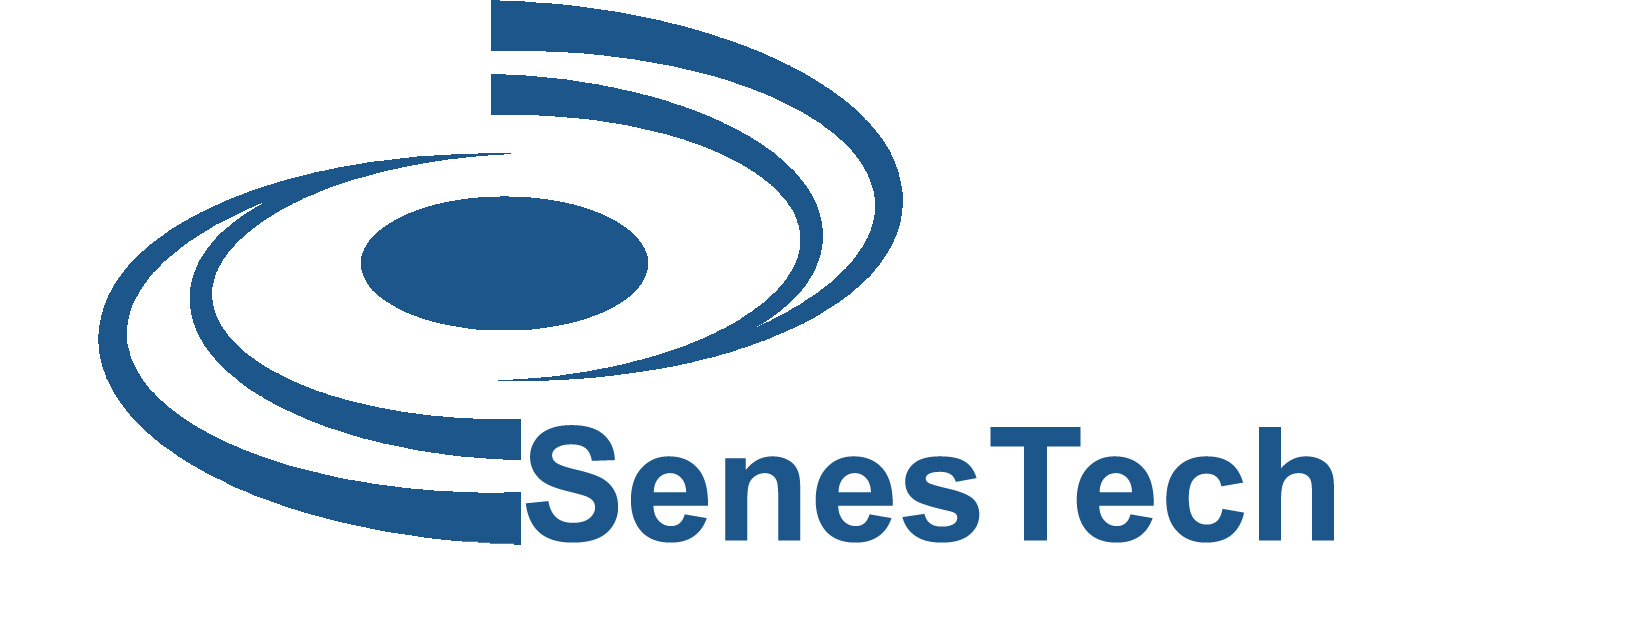 Senestech Blue logo